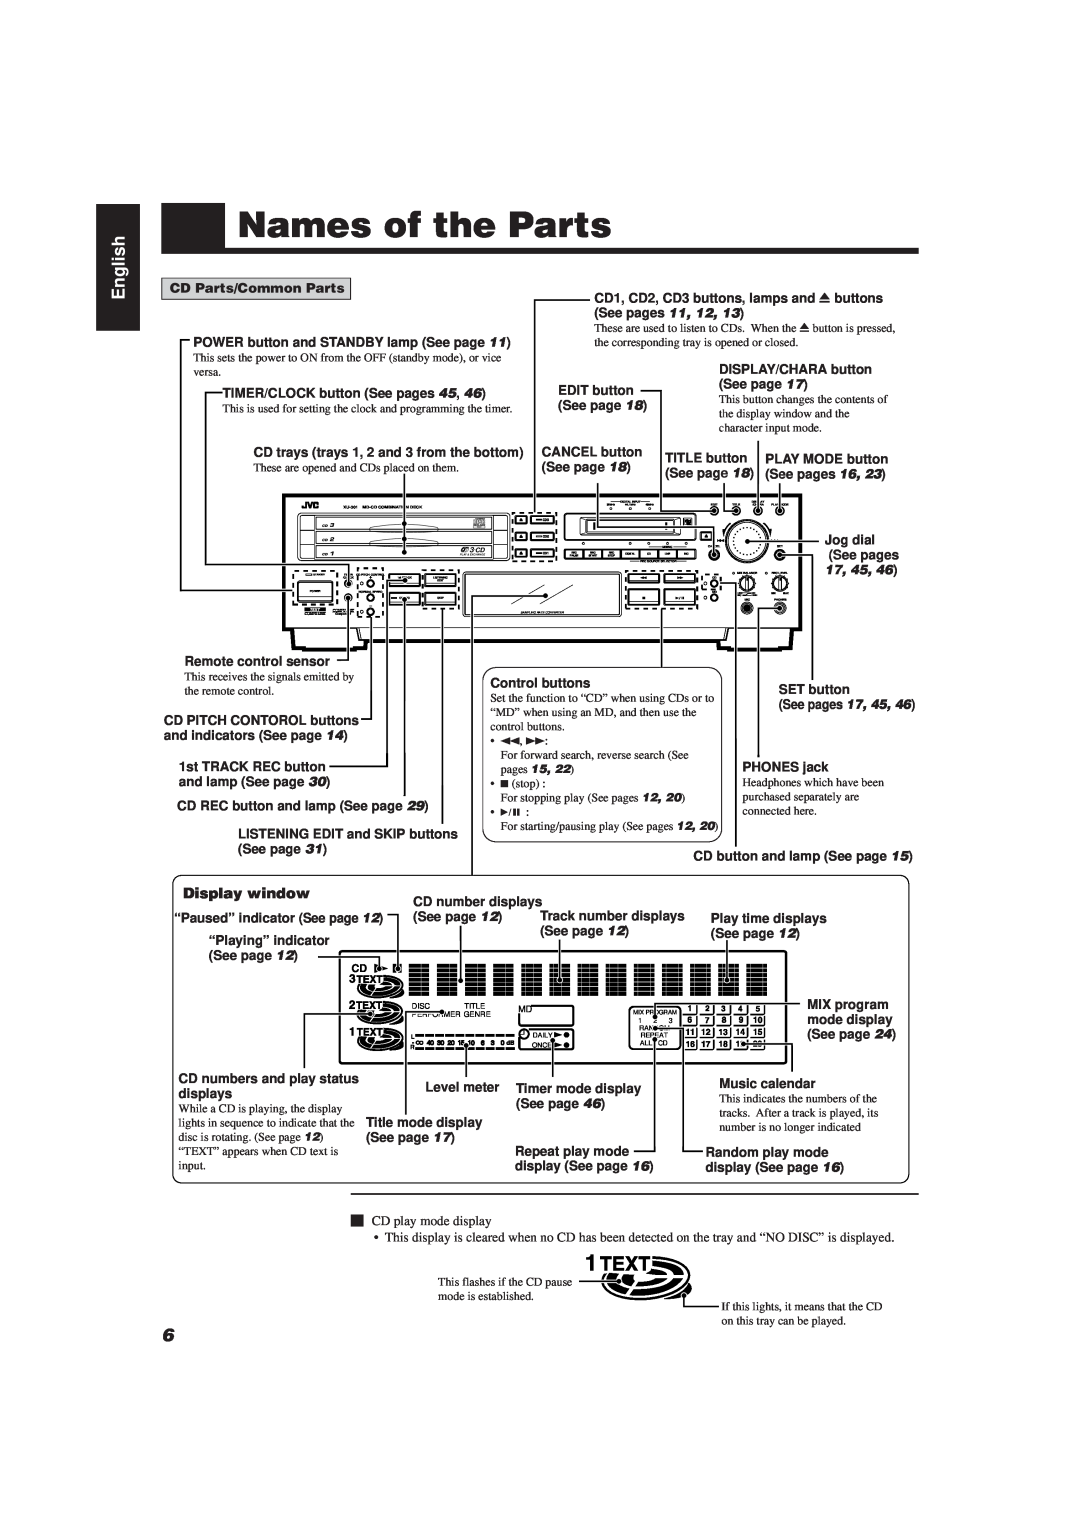 JVC XU-301BK manual Names of the Parts, English, Display window 